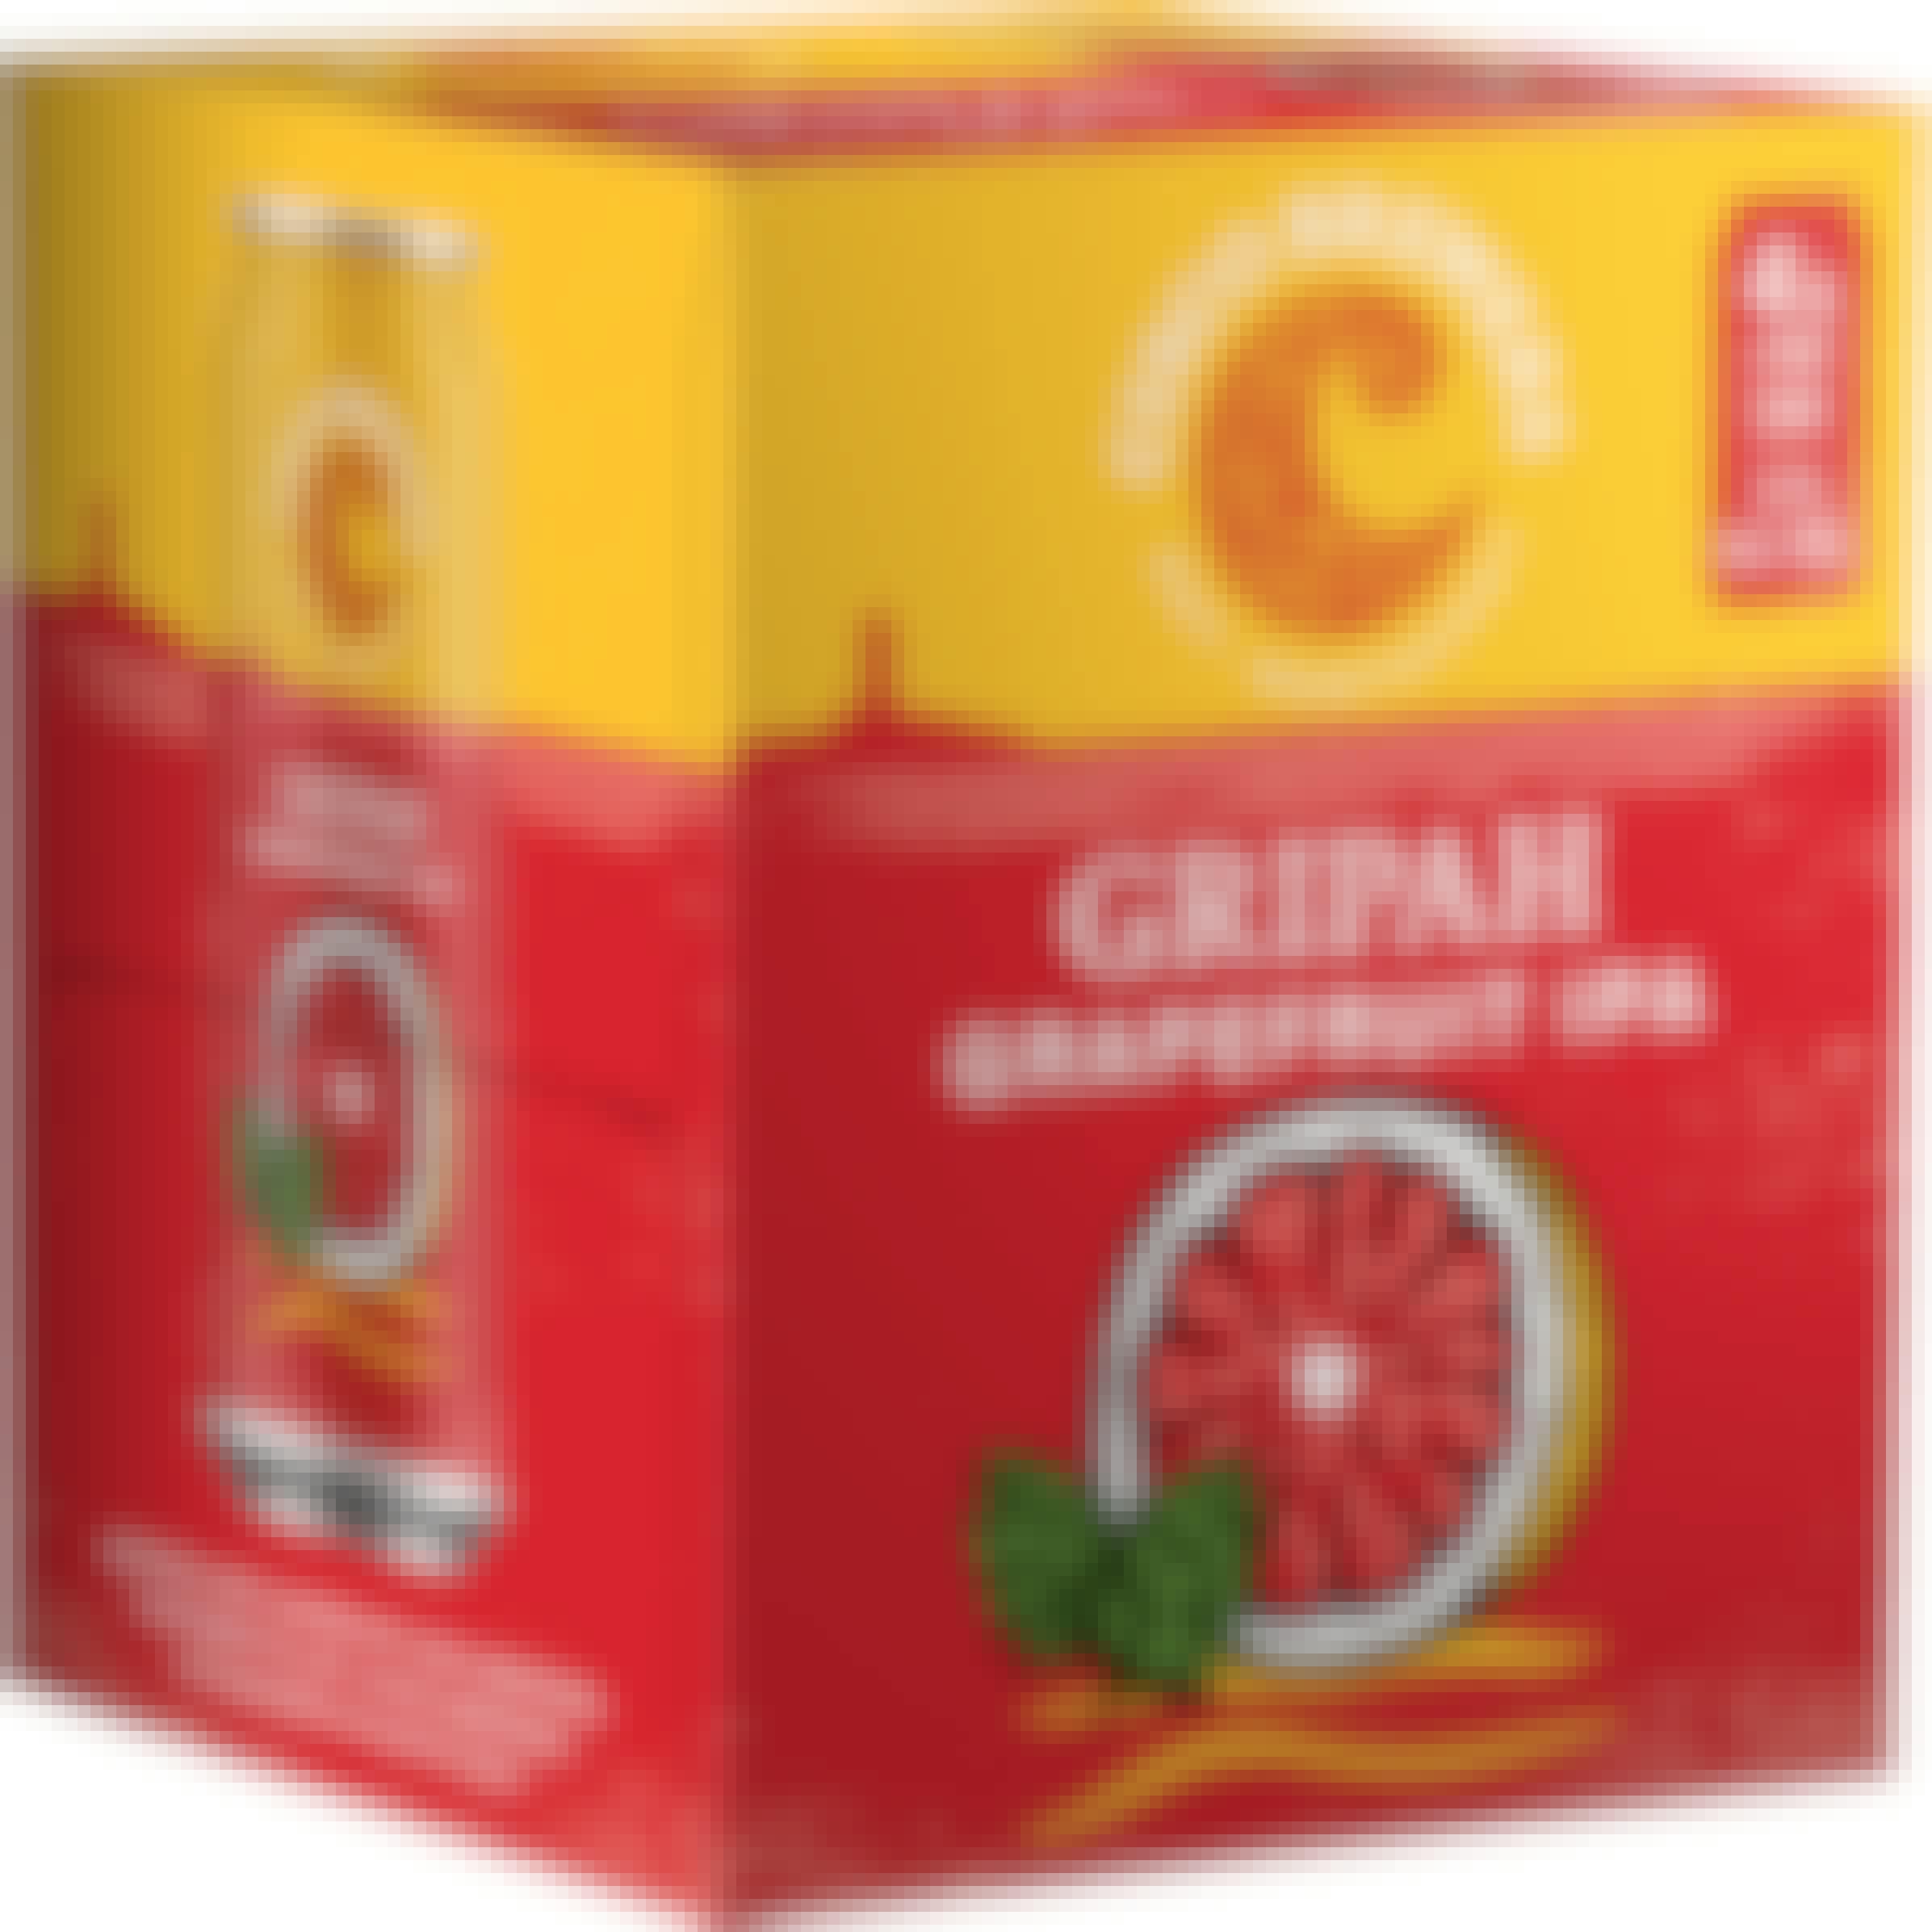 Cisco Brewers Gripah Grapefruit IPA 4 pack 16 oz. Can